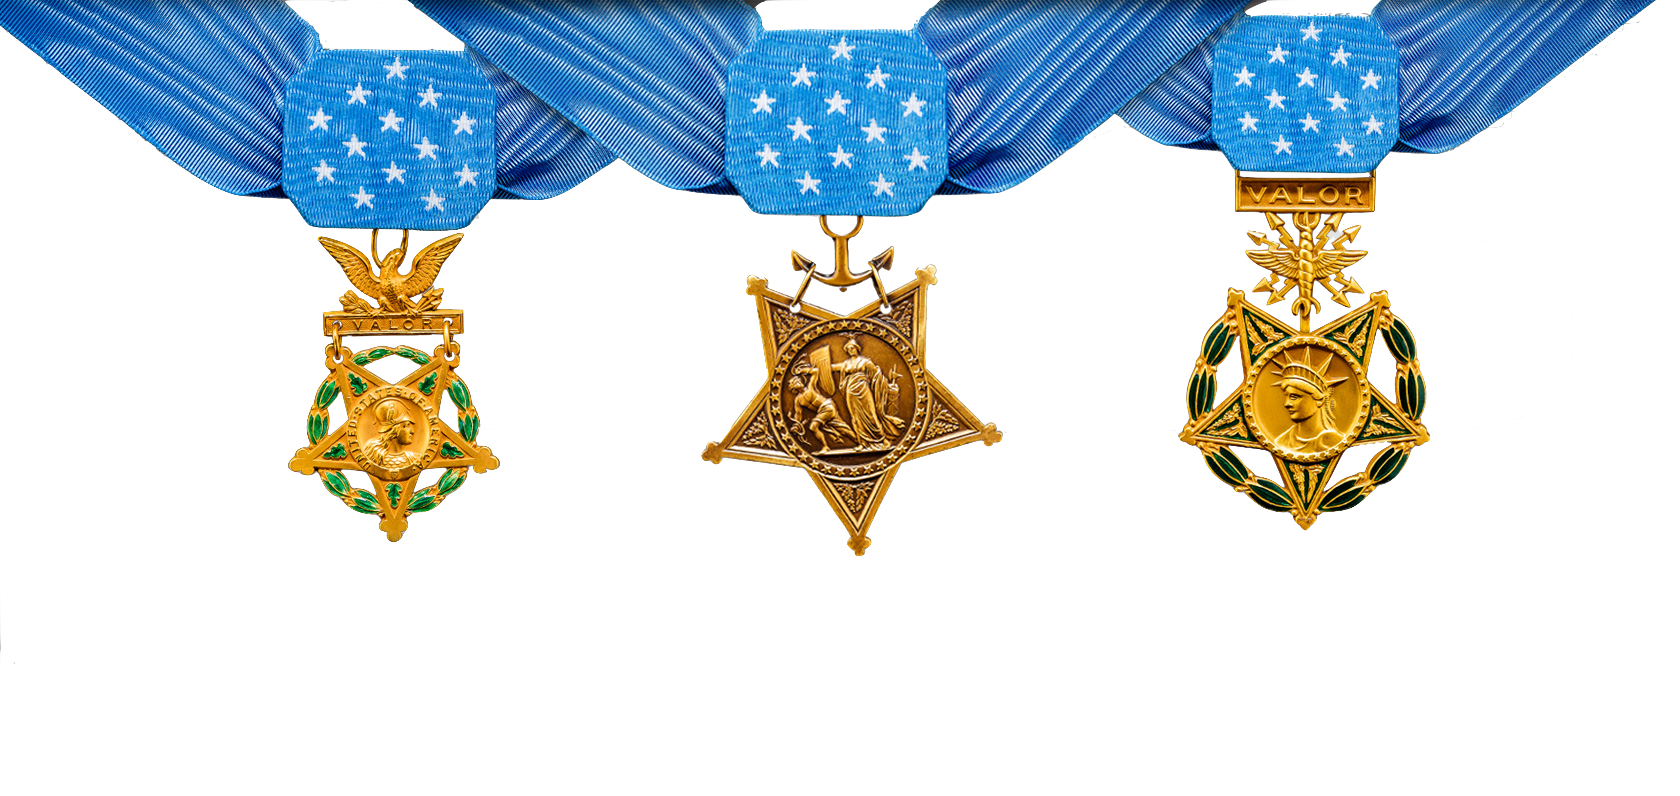 Medal of Honor медаль США. Медаль почета конгресса США. Медаль почёта (Medal of Honor). Высшая награда США медаль почета. The most medals